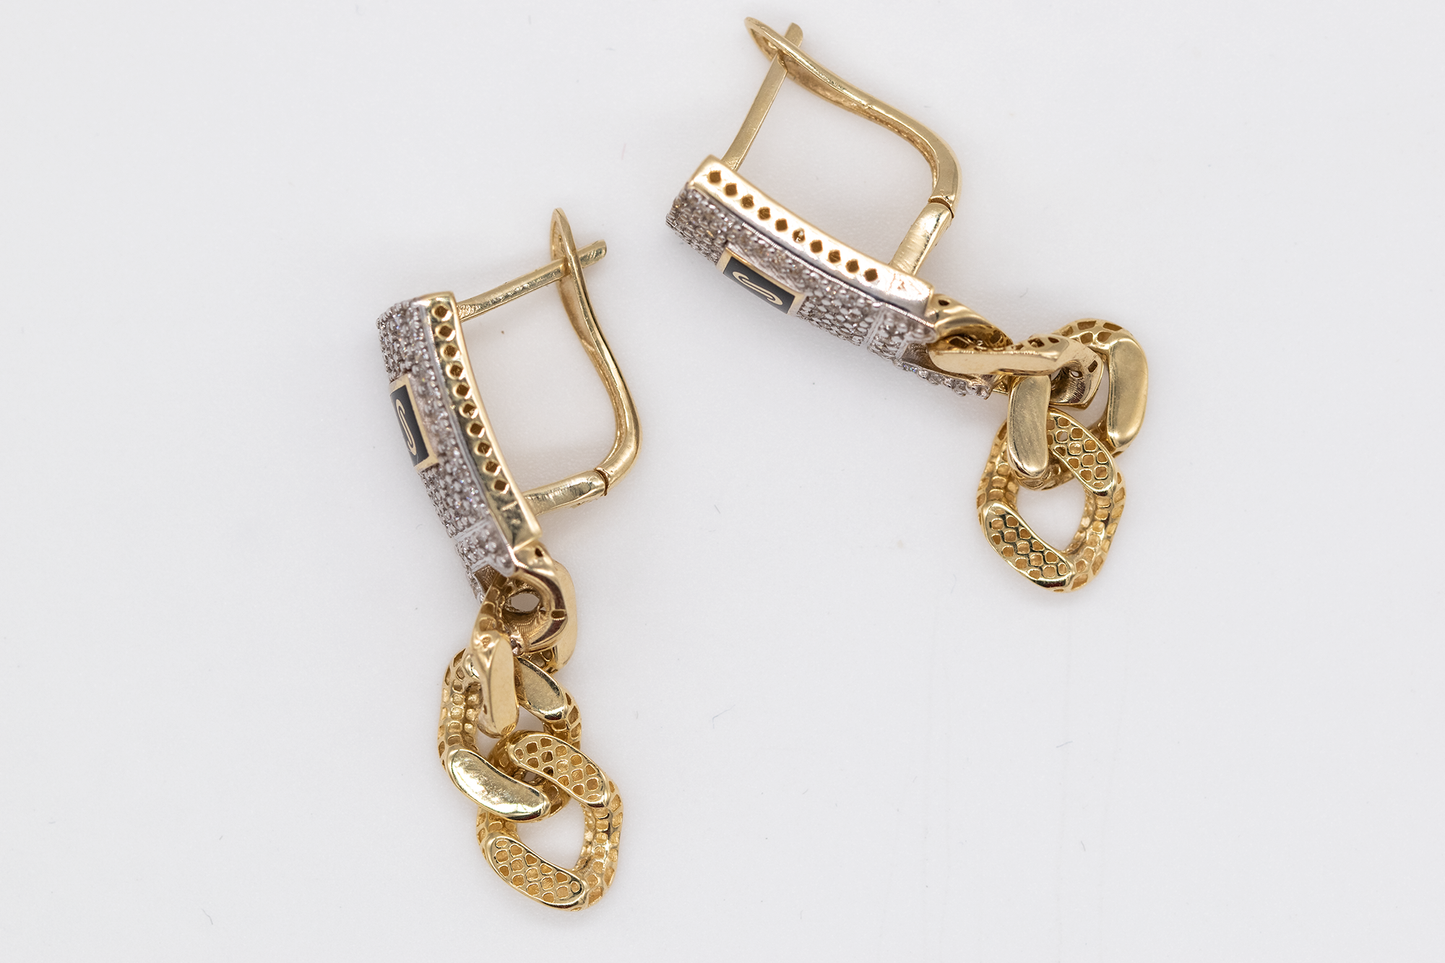 Monaco gold 10k earrings with zirconia. Aretes marca monaco de oro 10k con zirconia